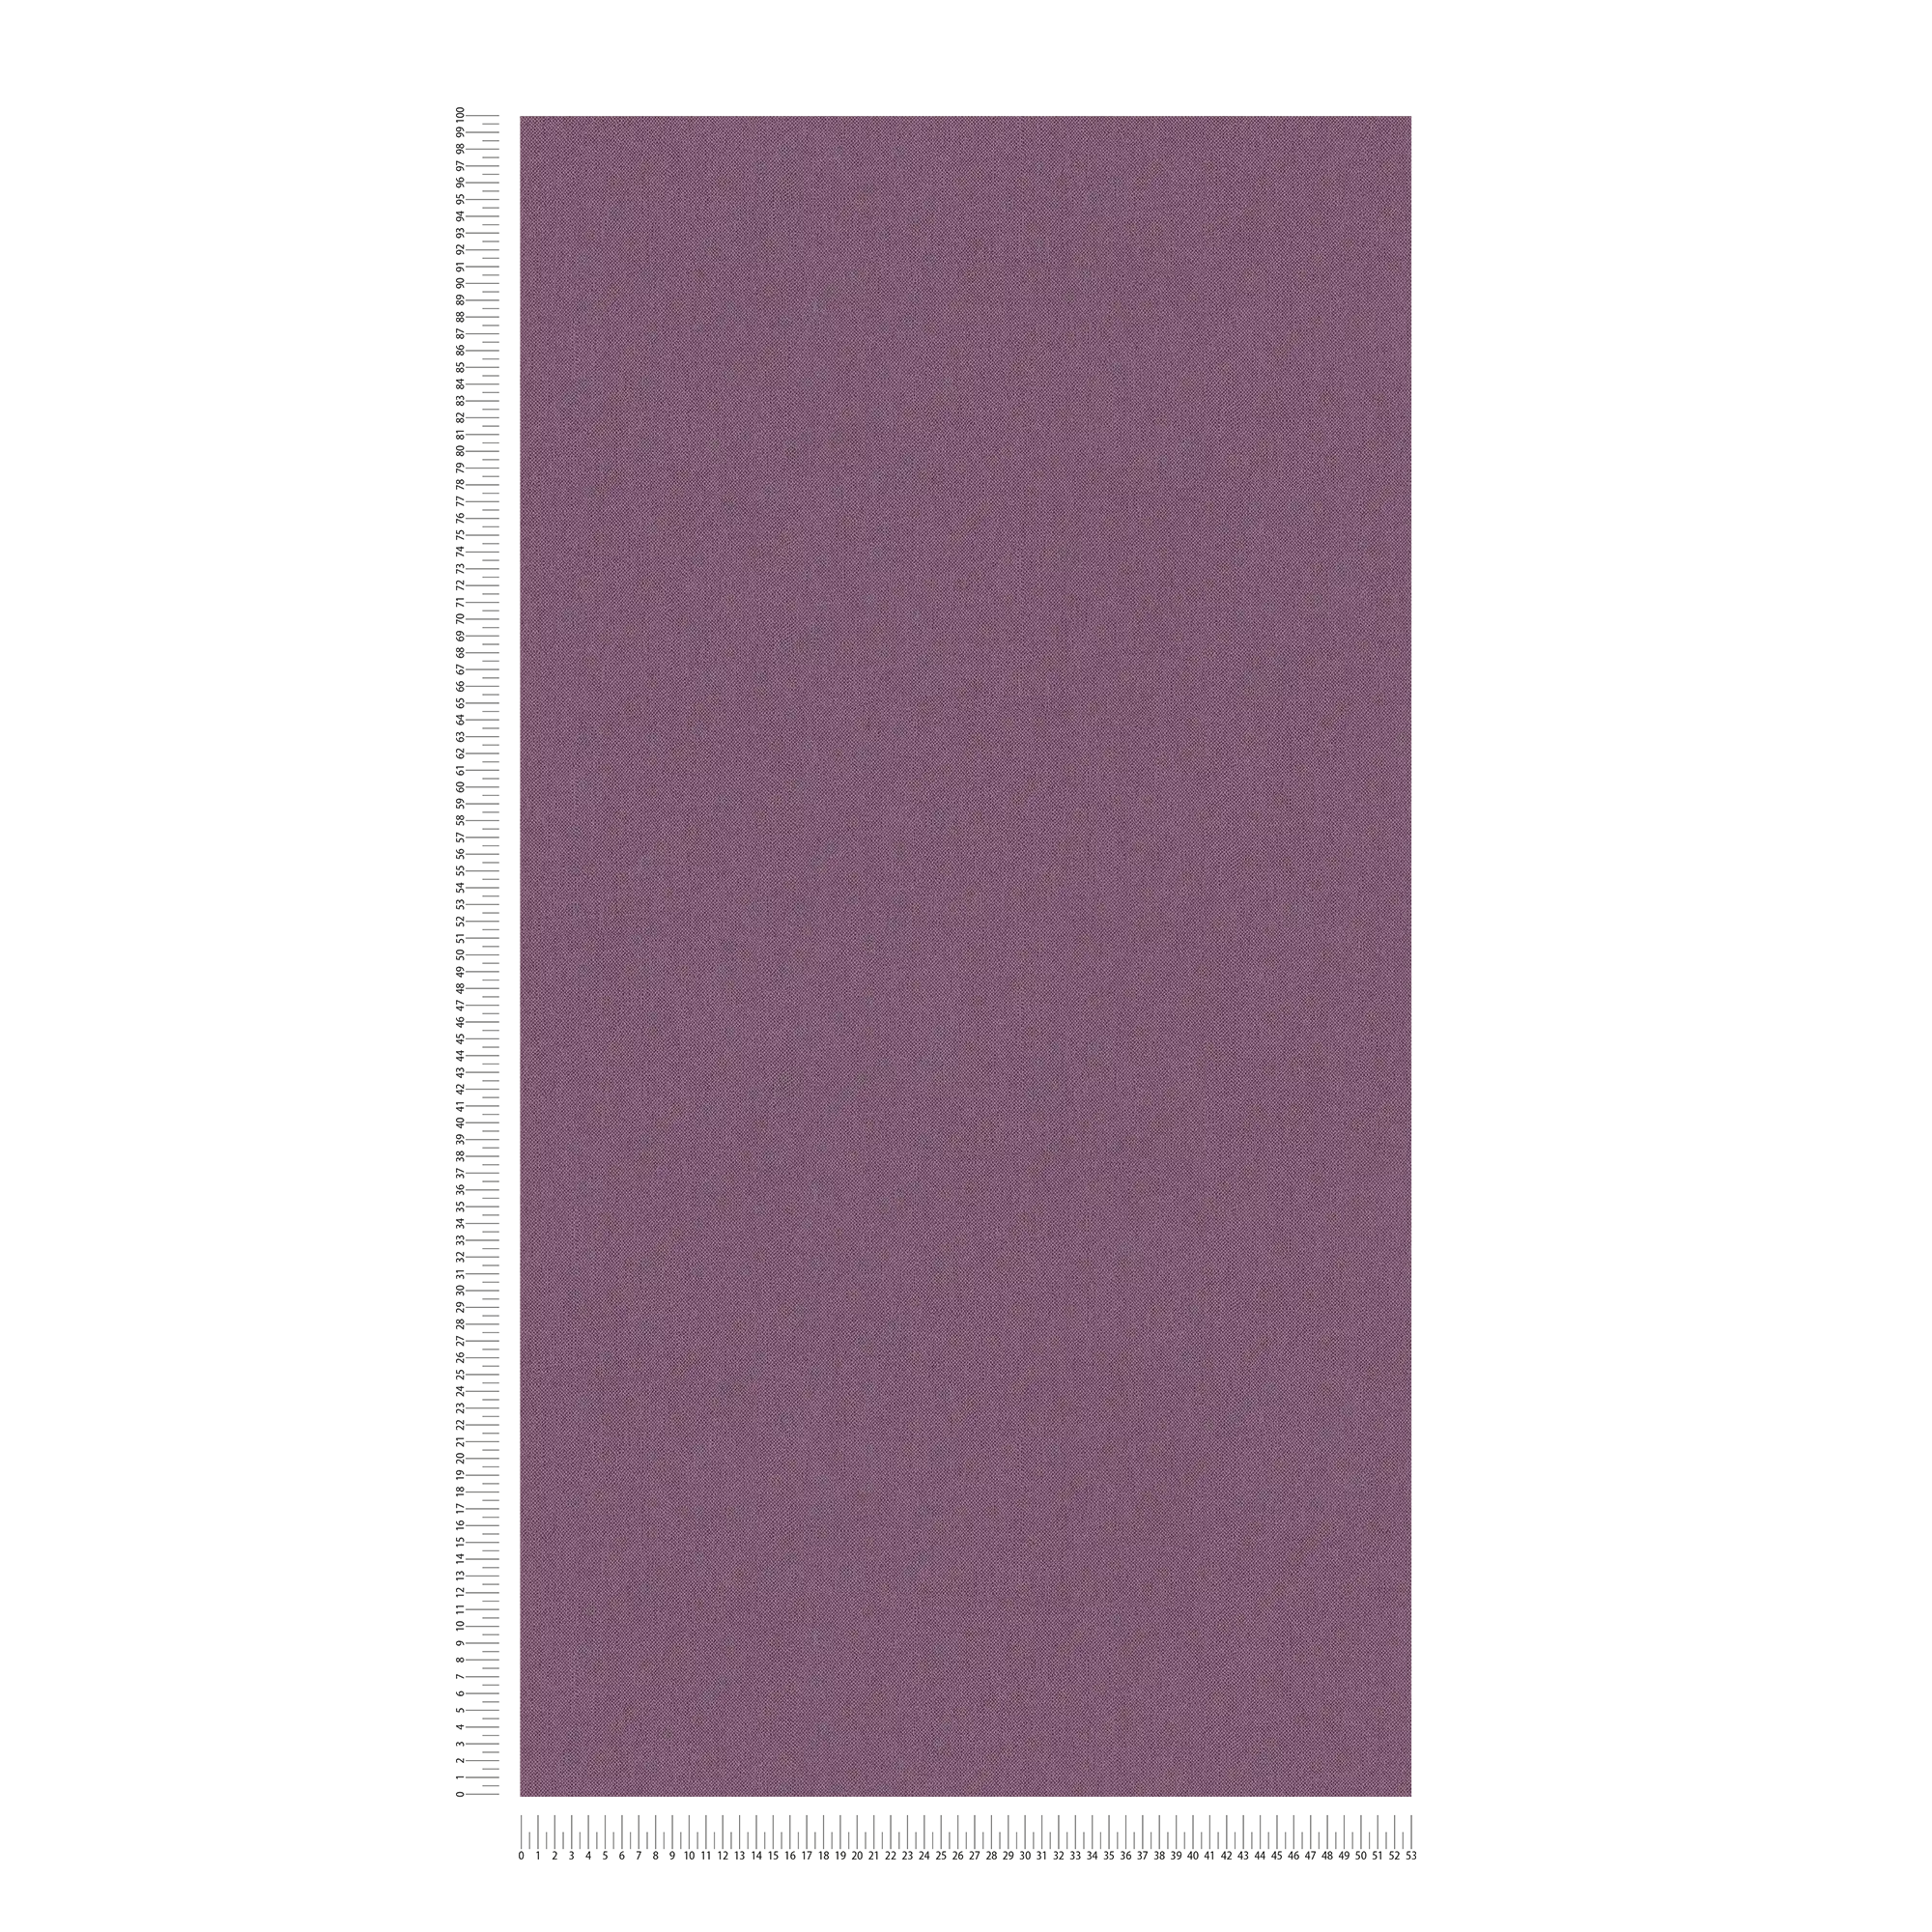             Lila Tapete einfarbig, matt Textiloptik & Gewebestruktur
        